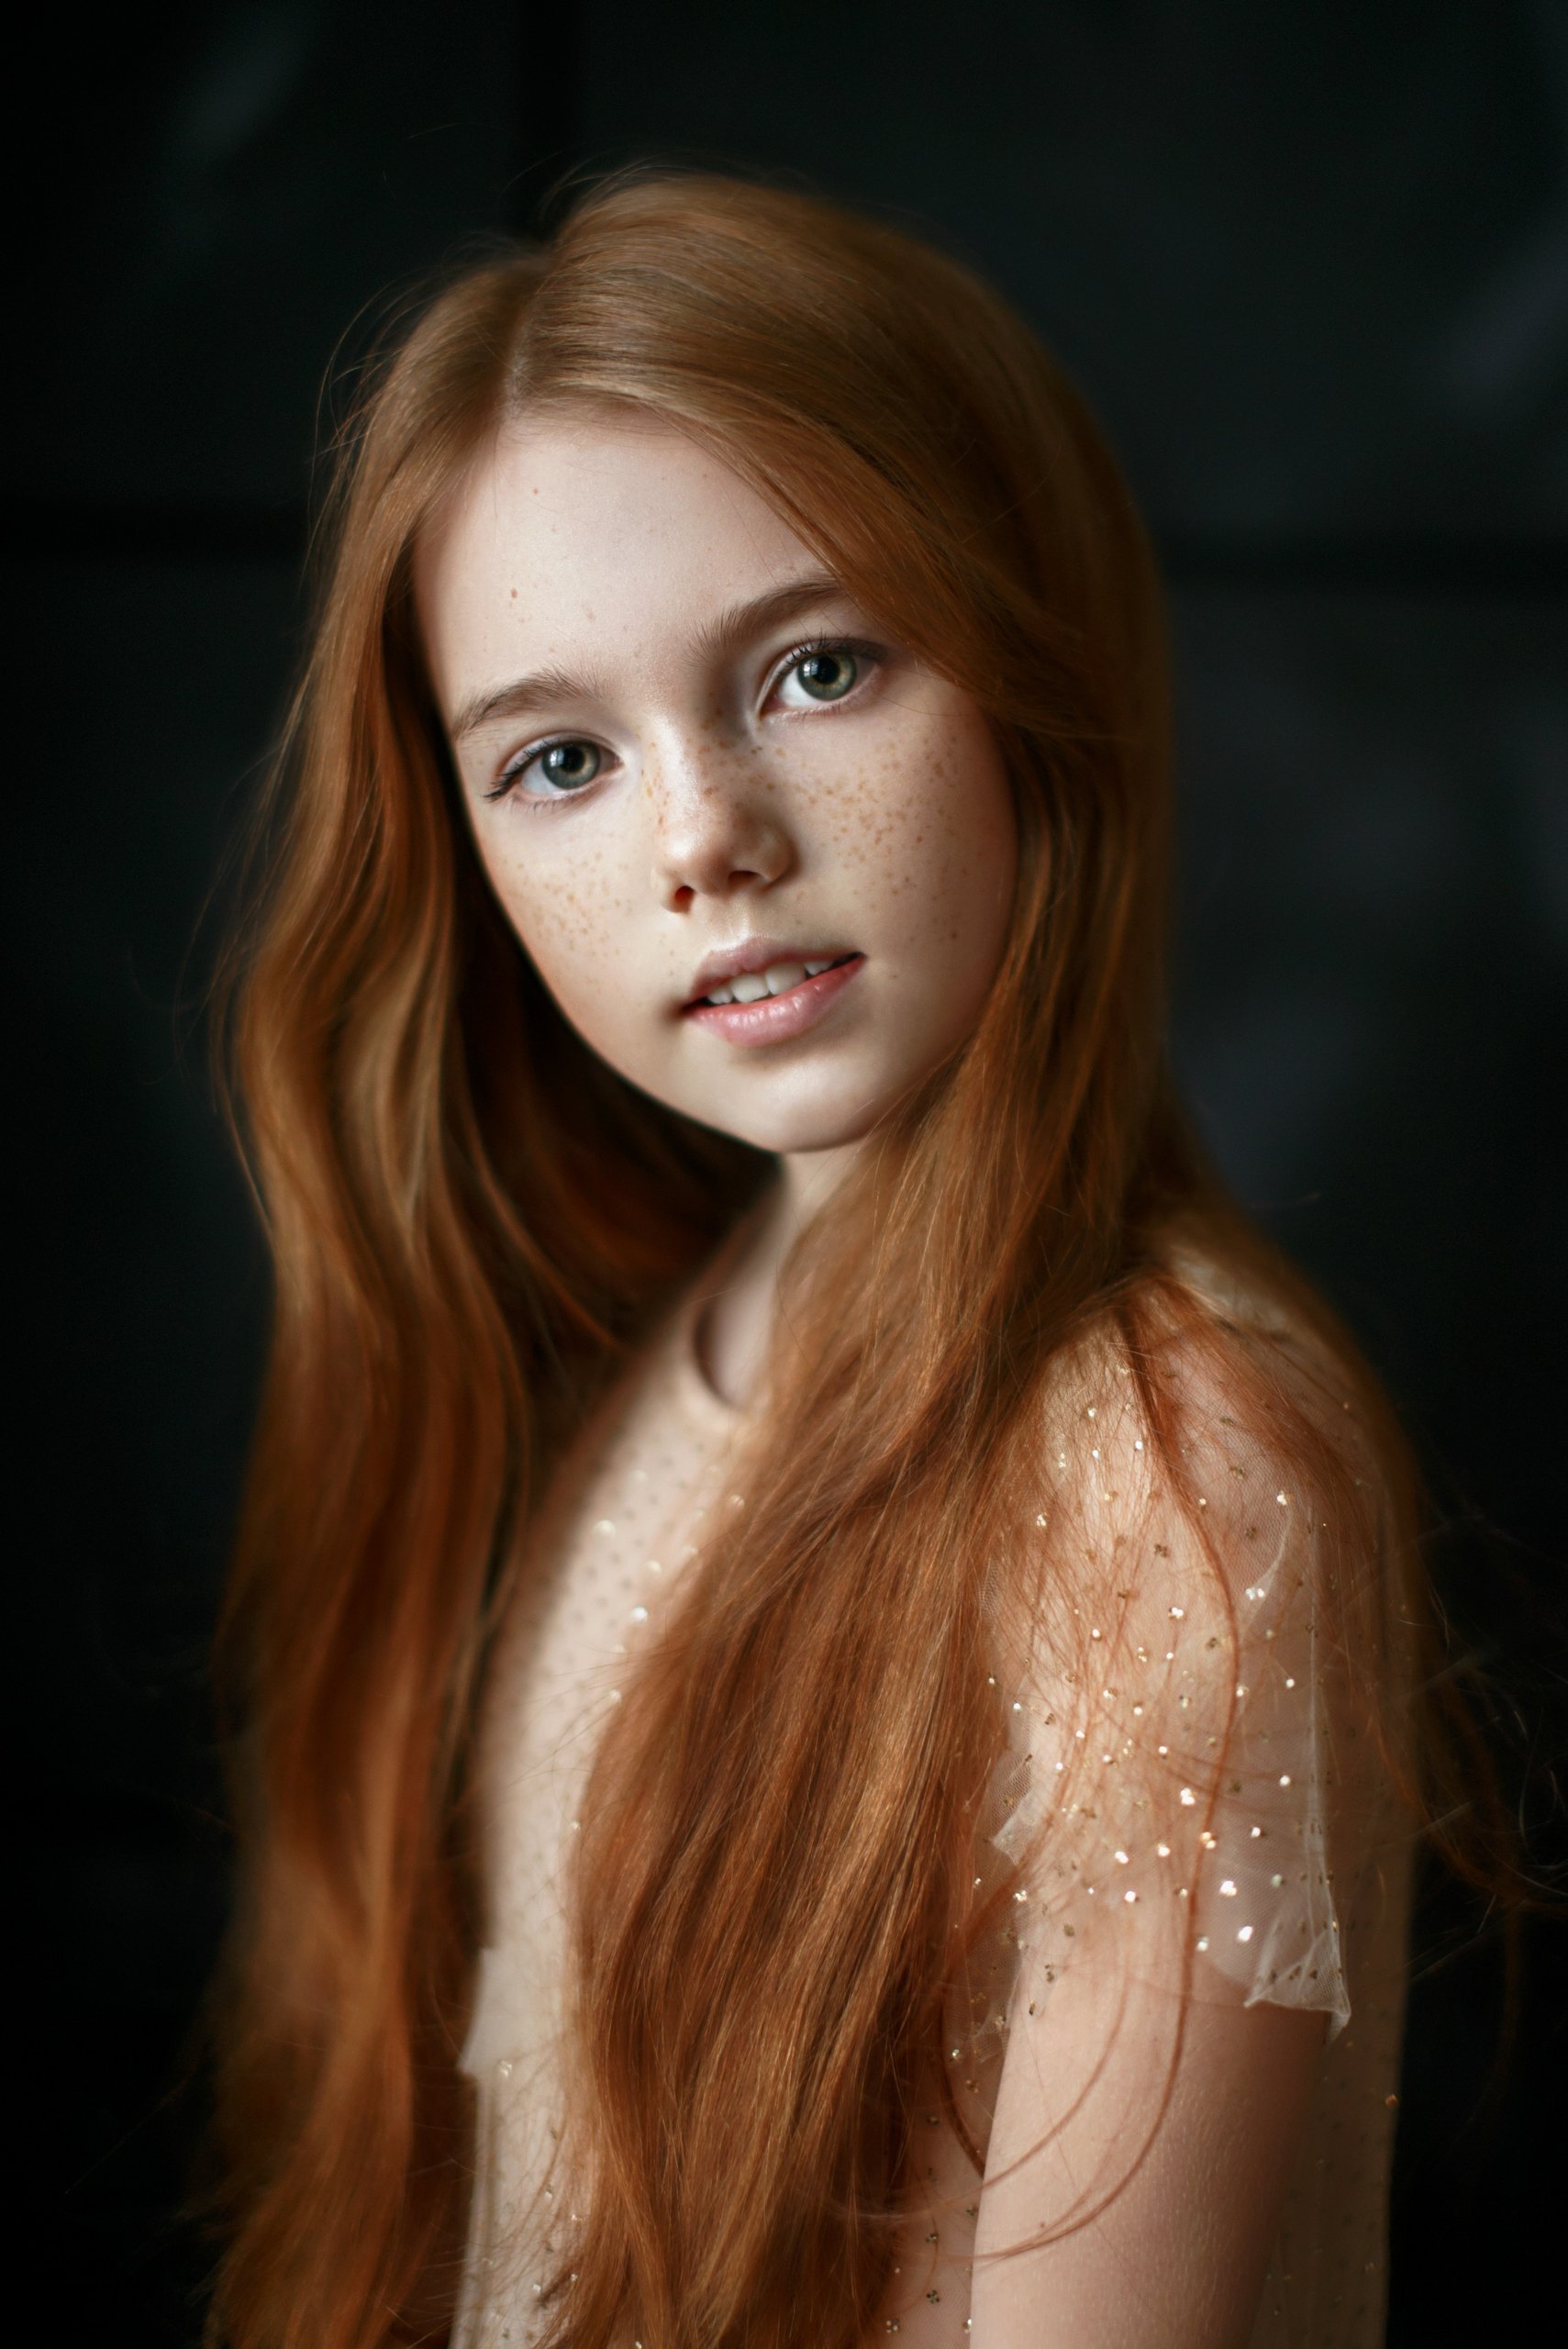 Polina,portrait,girl,child,, Черепко Павел